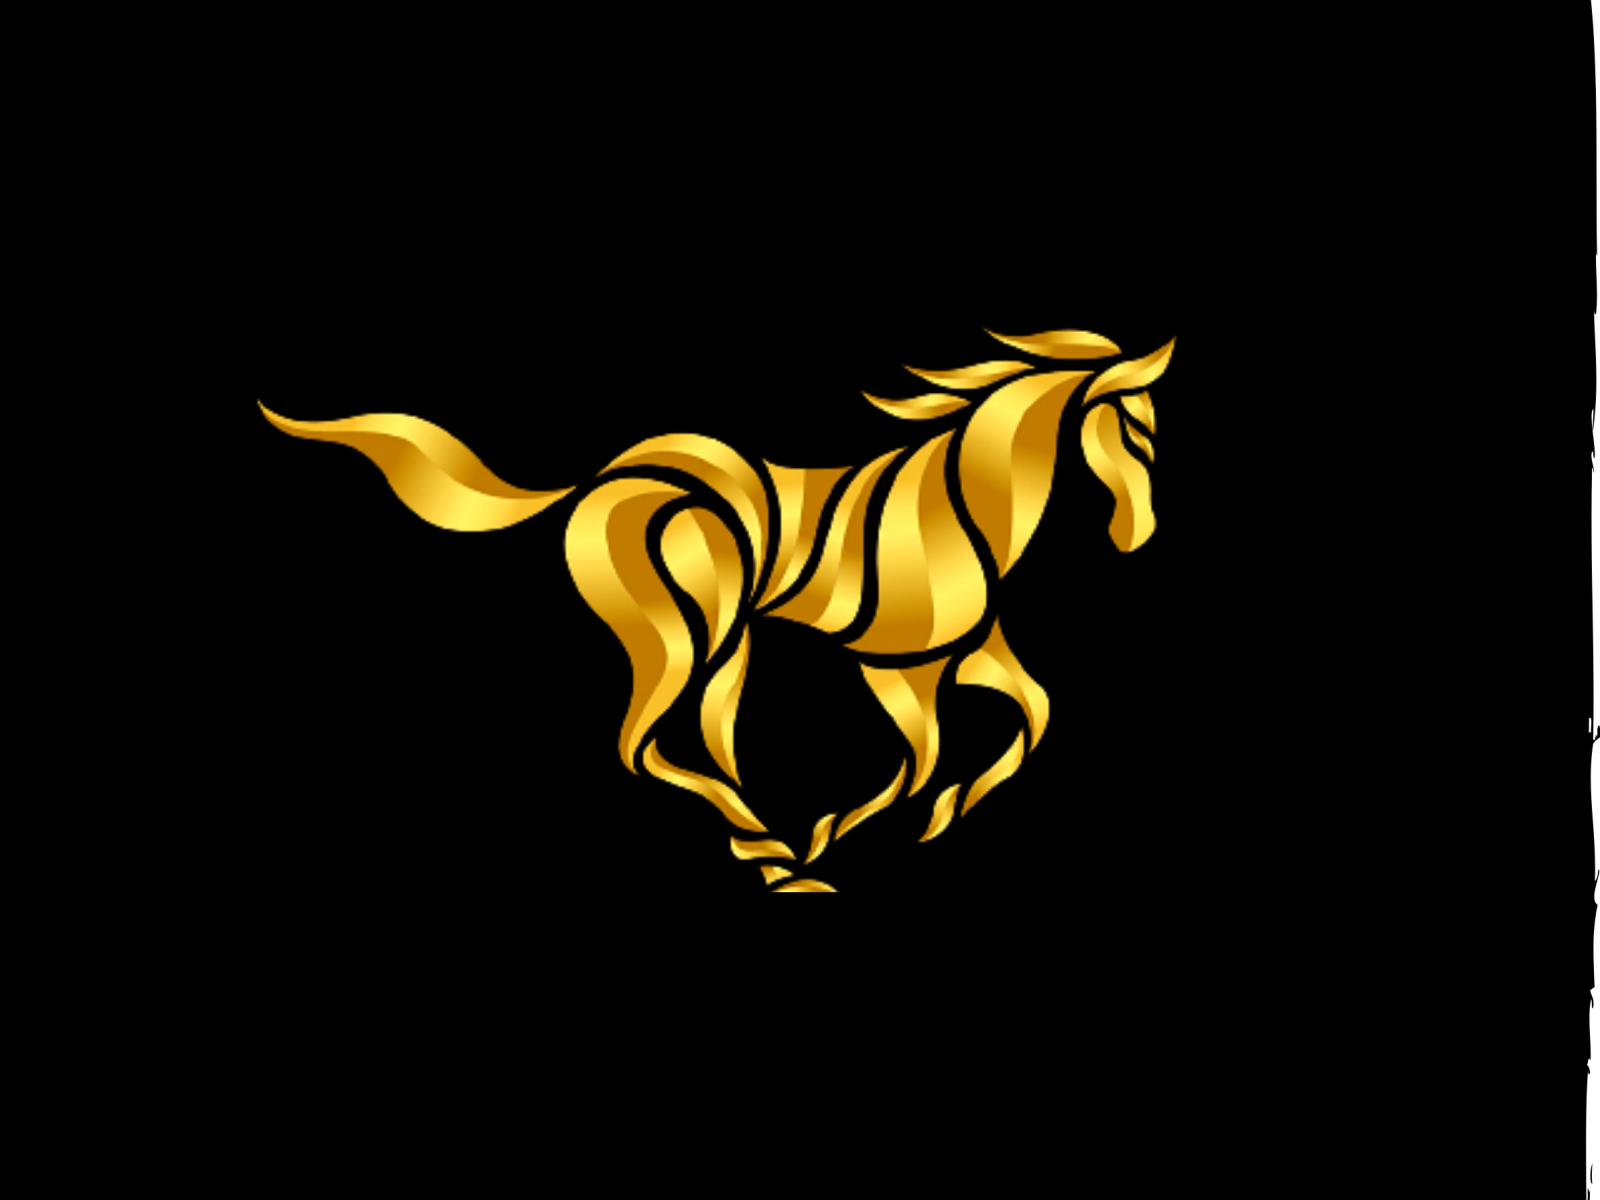 USA Equestrian Logo PNG Transparent & SVG Vector - Freebie Supply